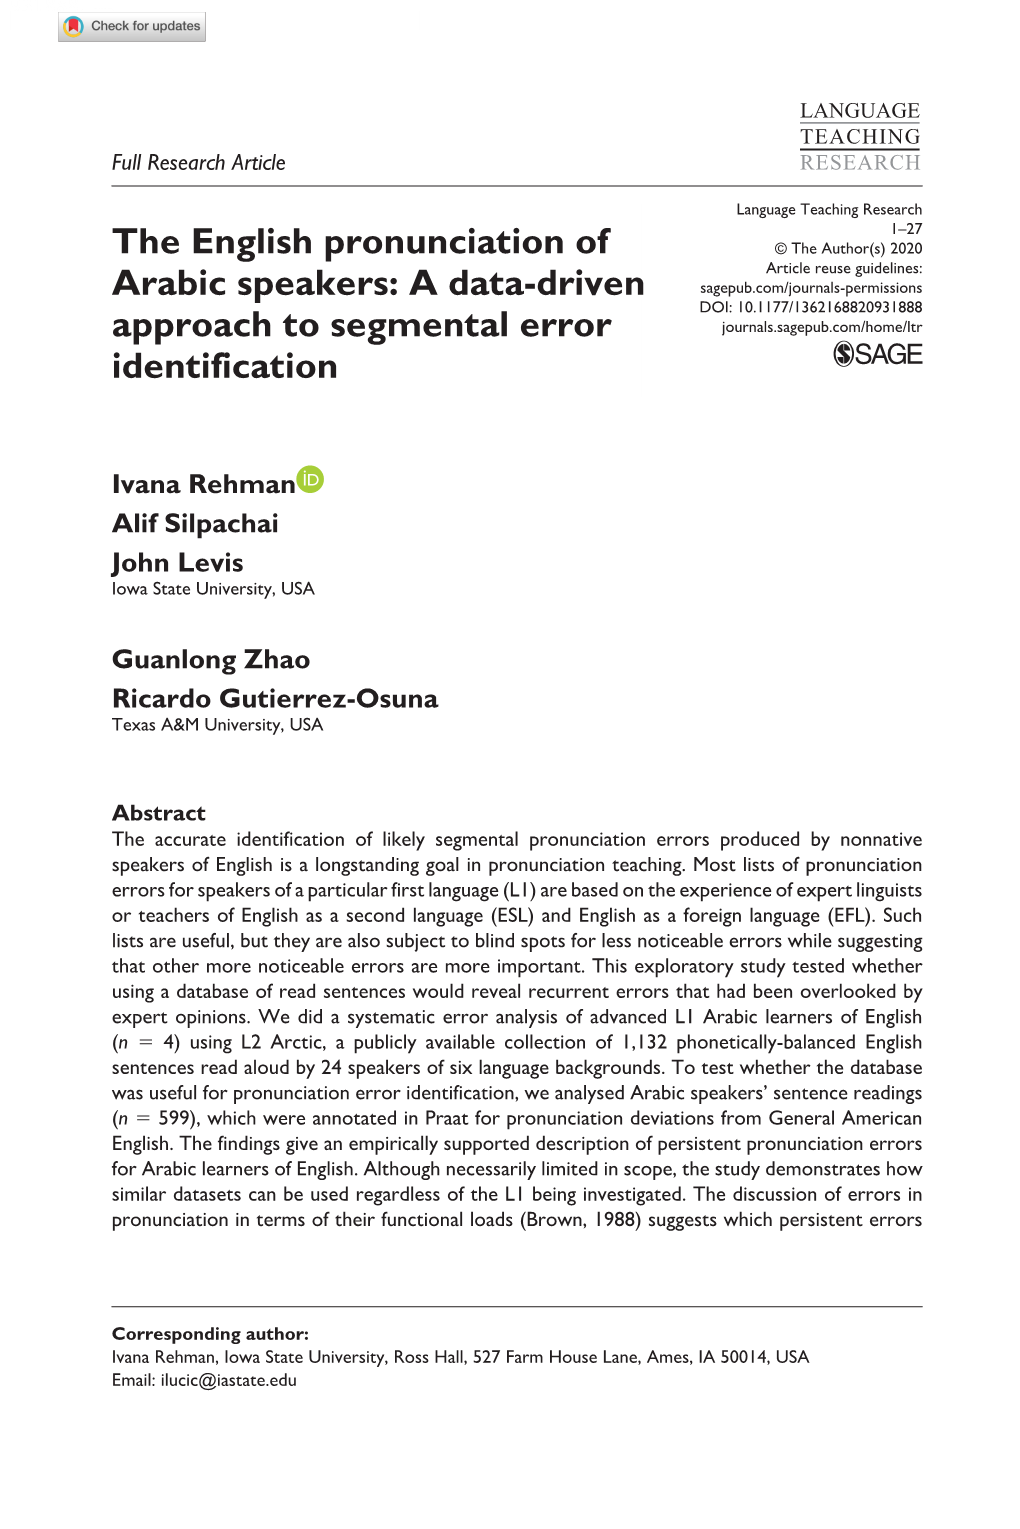 The English Pronunciation of Arabic Speakers: a Data-Driven Approach to Segmental Error Identification